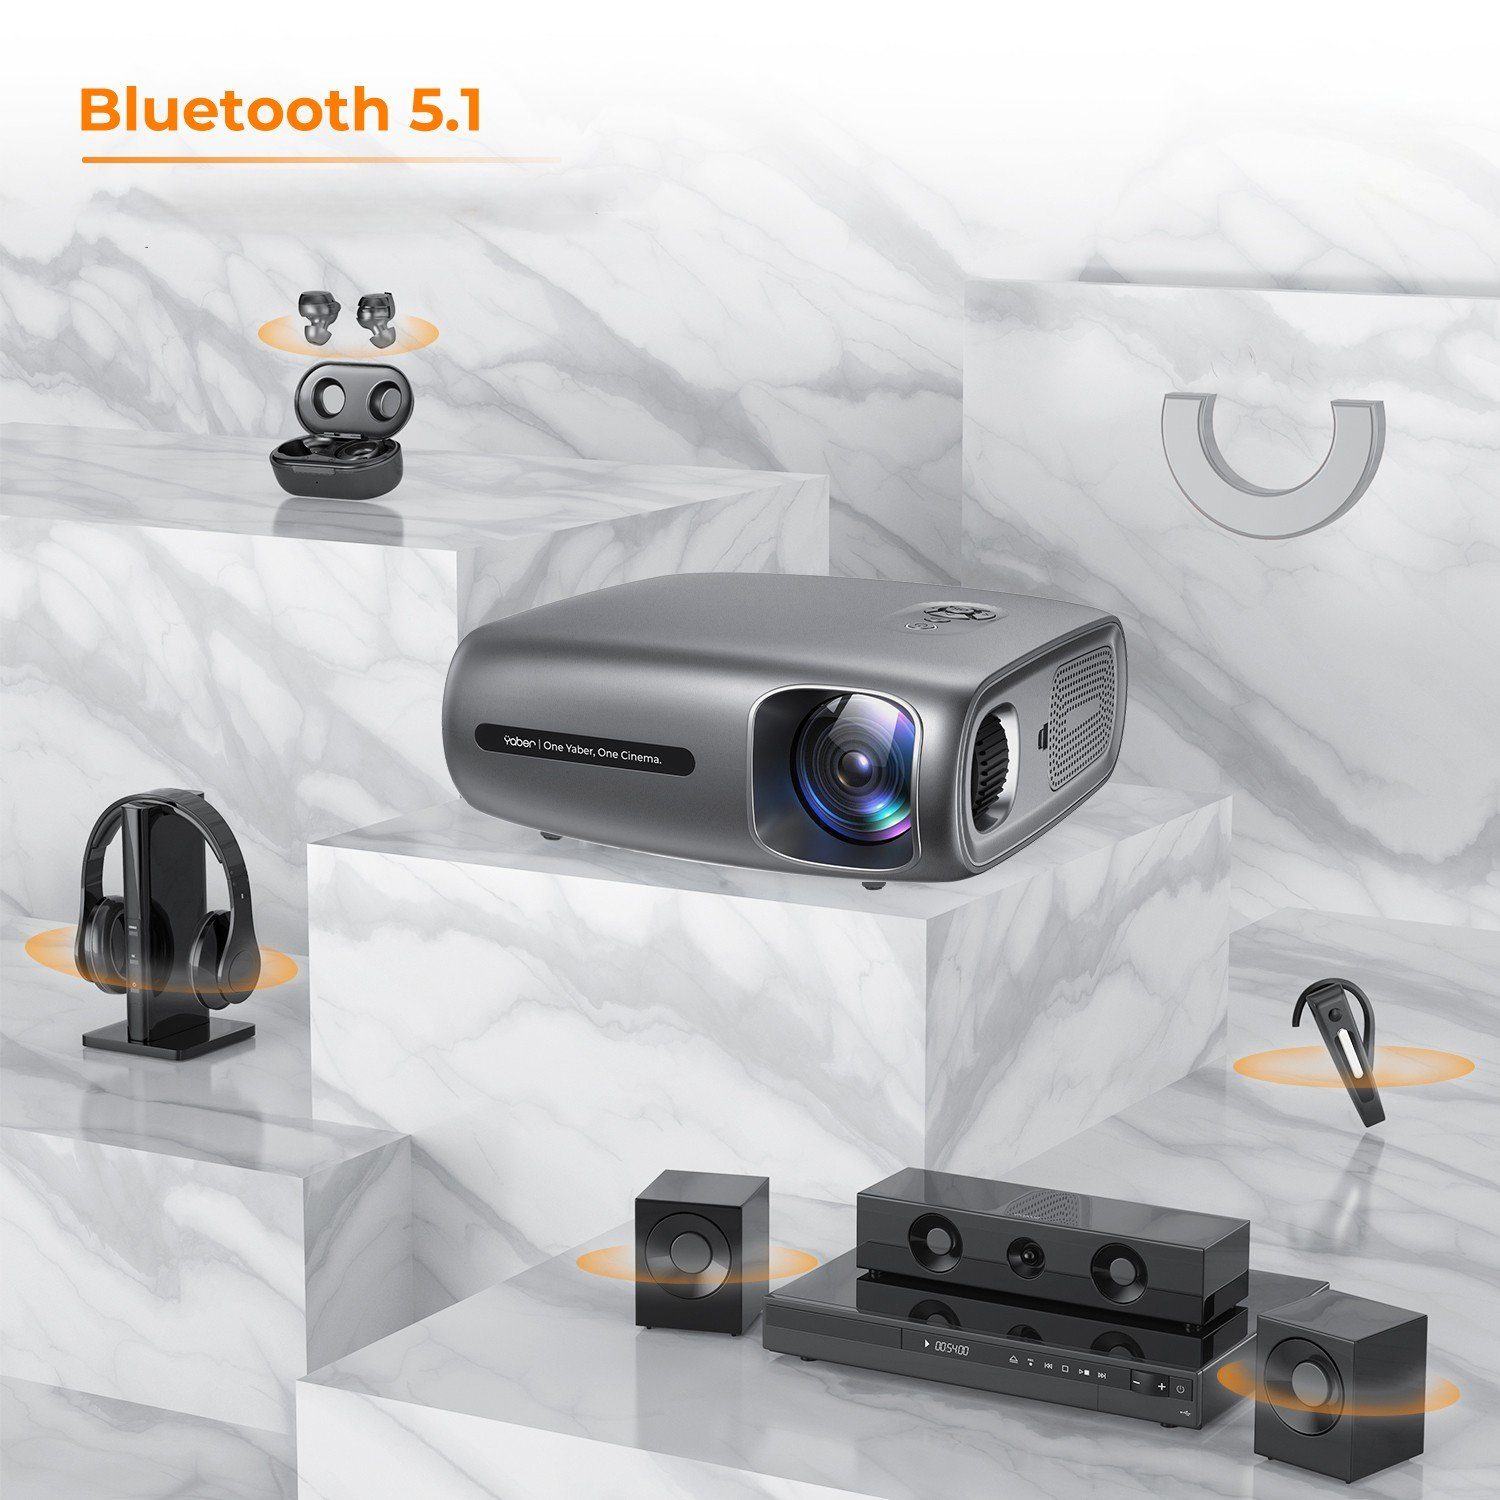 Sinaopus HD HD) (1920x1080 Beamer 5G px, 4K Bluetooth Projektor, WiFi LED-Beamer Full